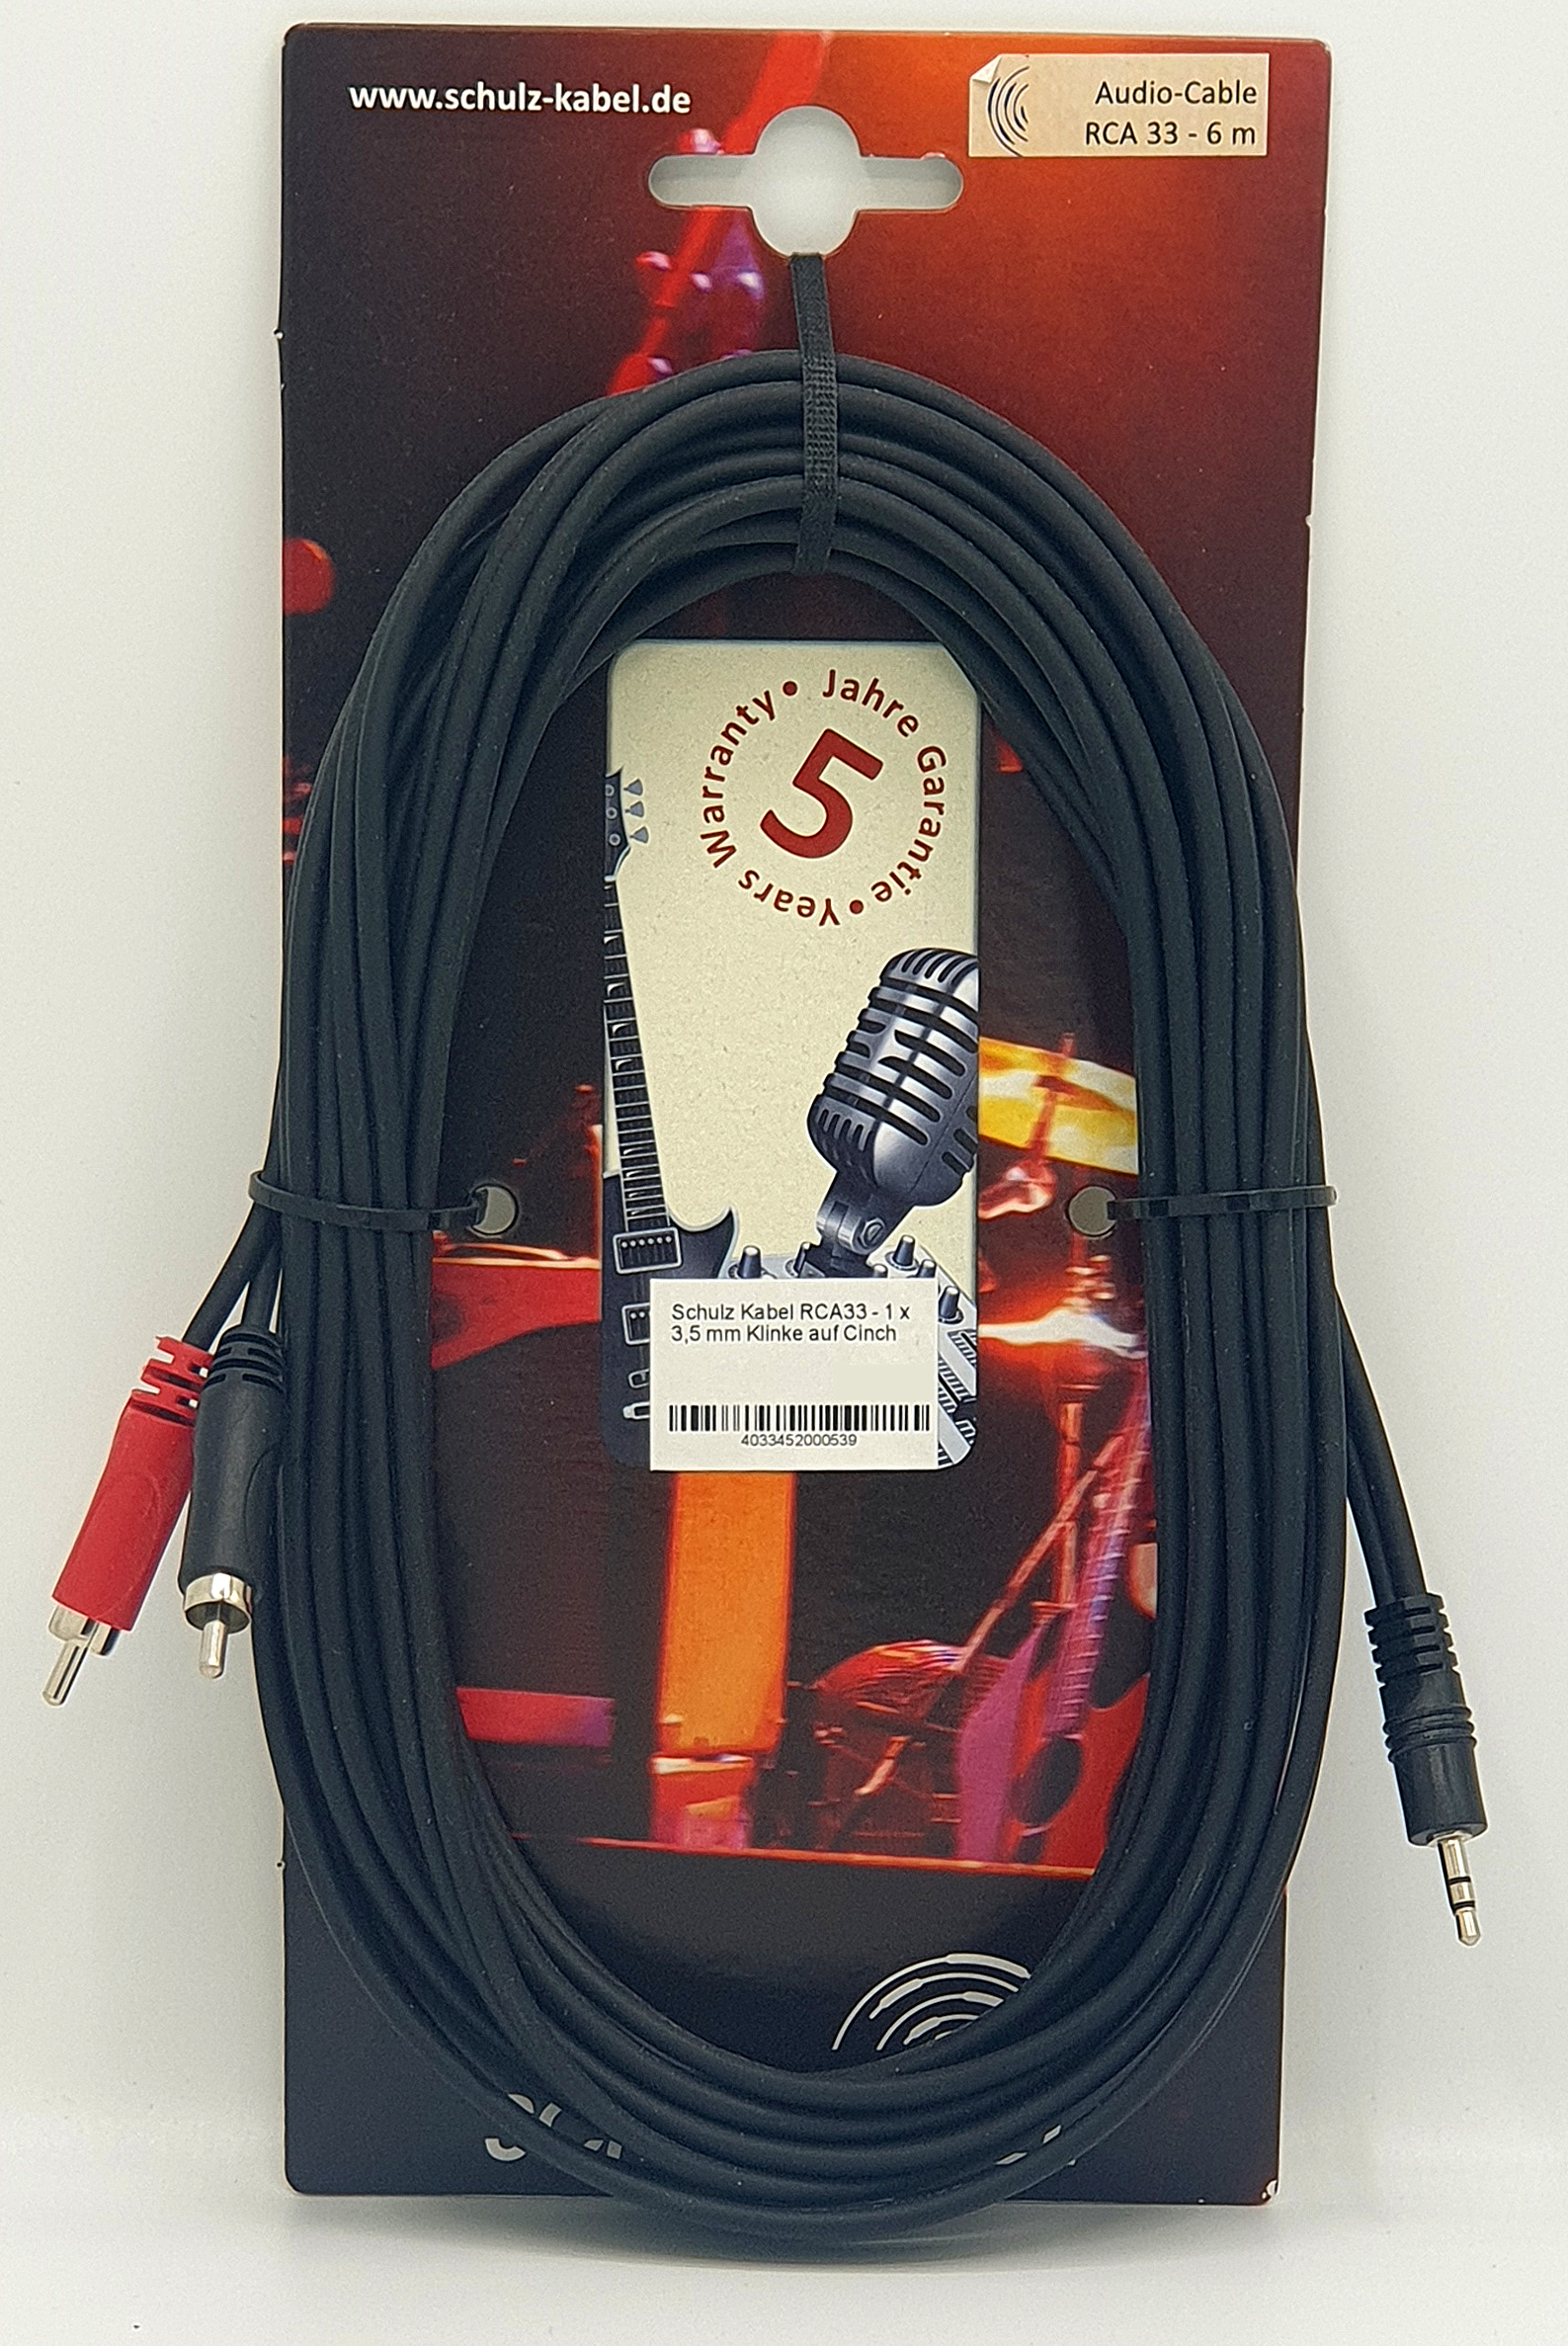 Schulz Kabel RCA33 - 1 x 3,5 mm Klinke auf Cinch